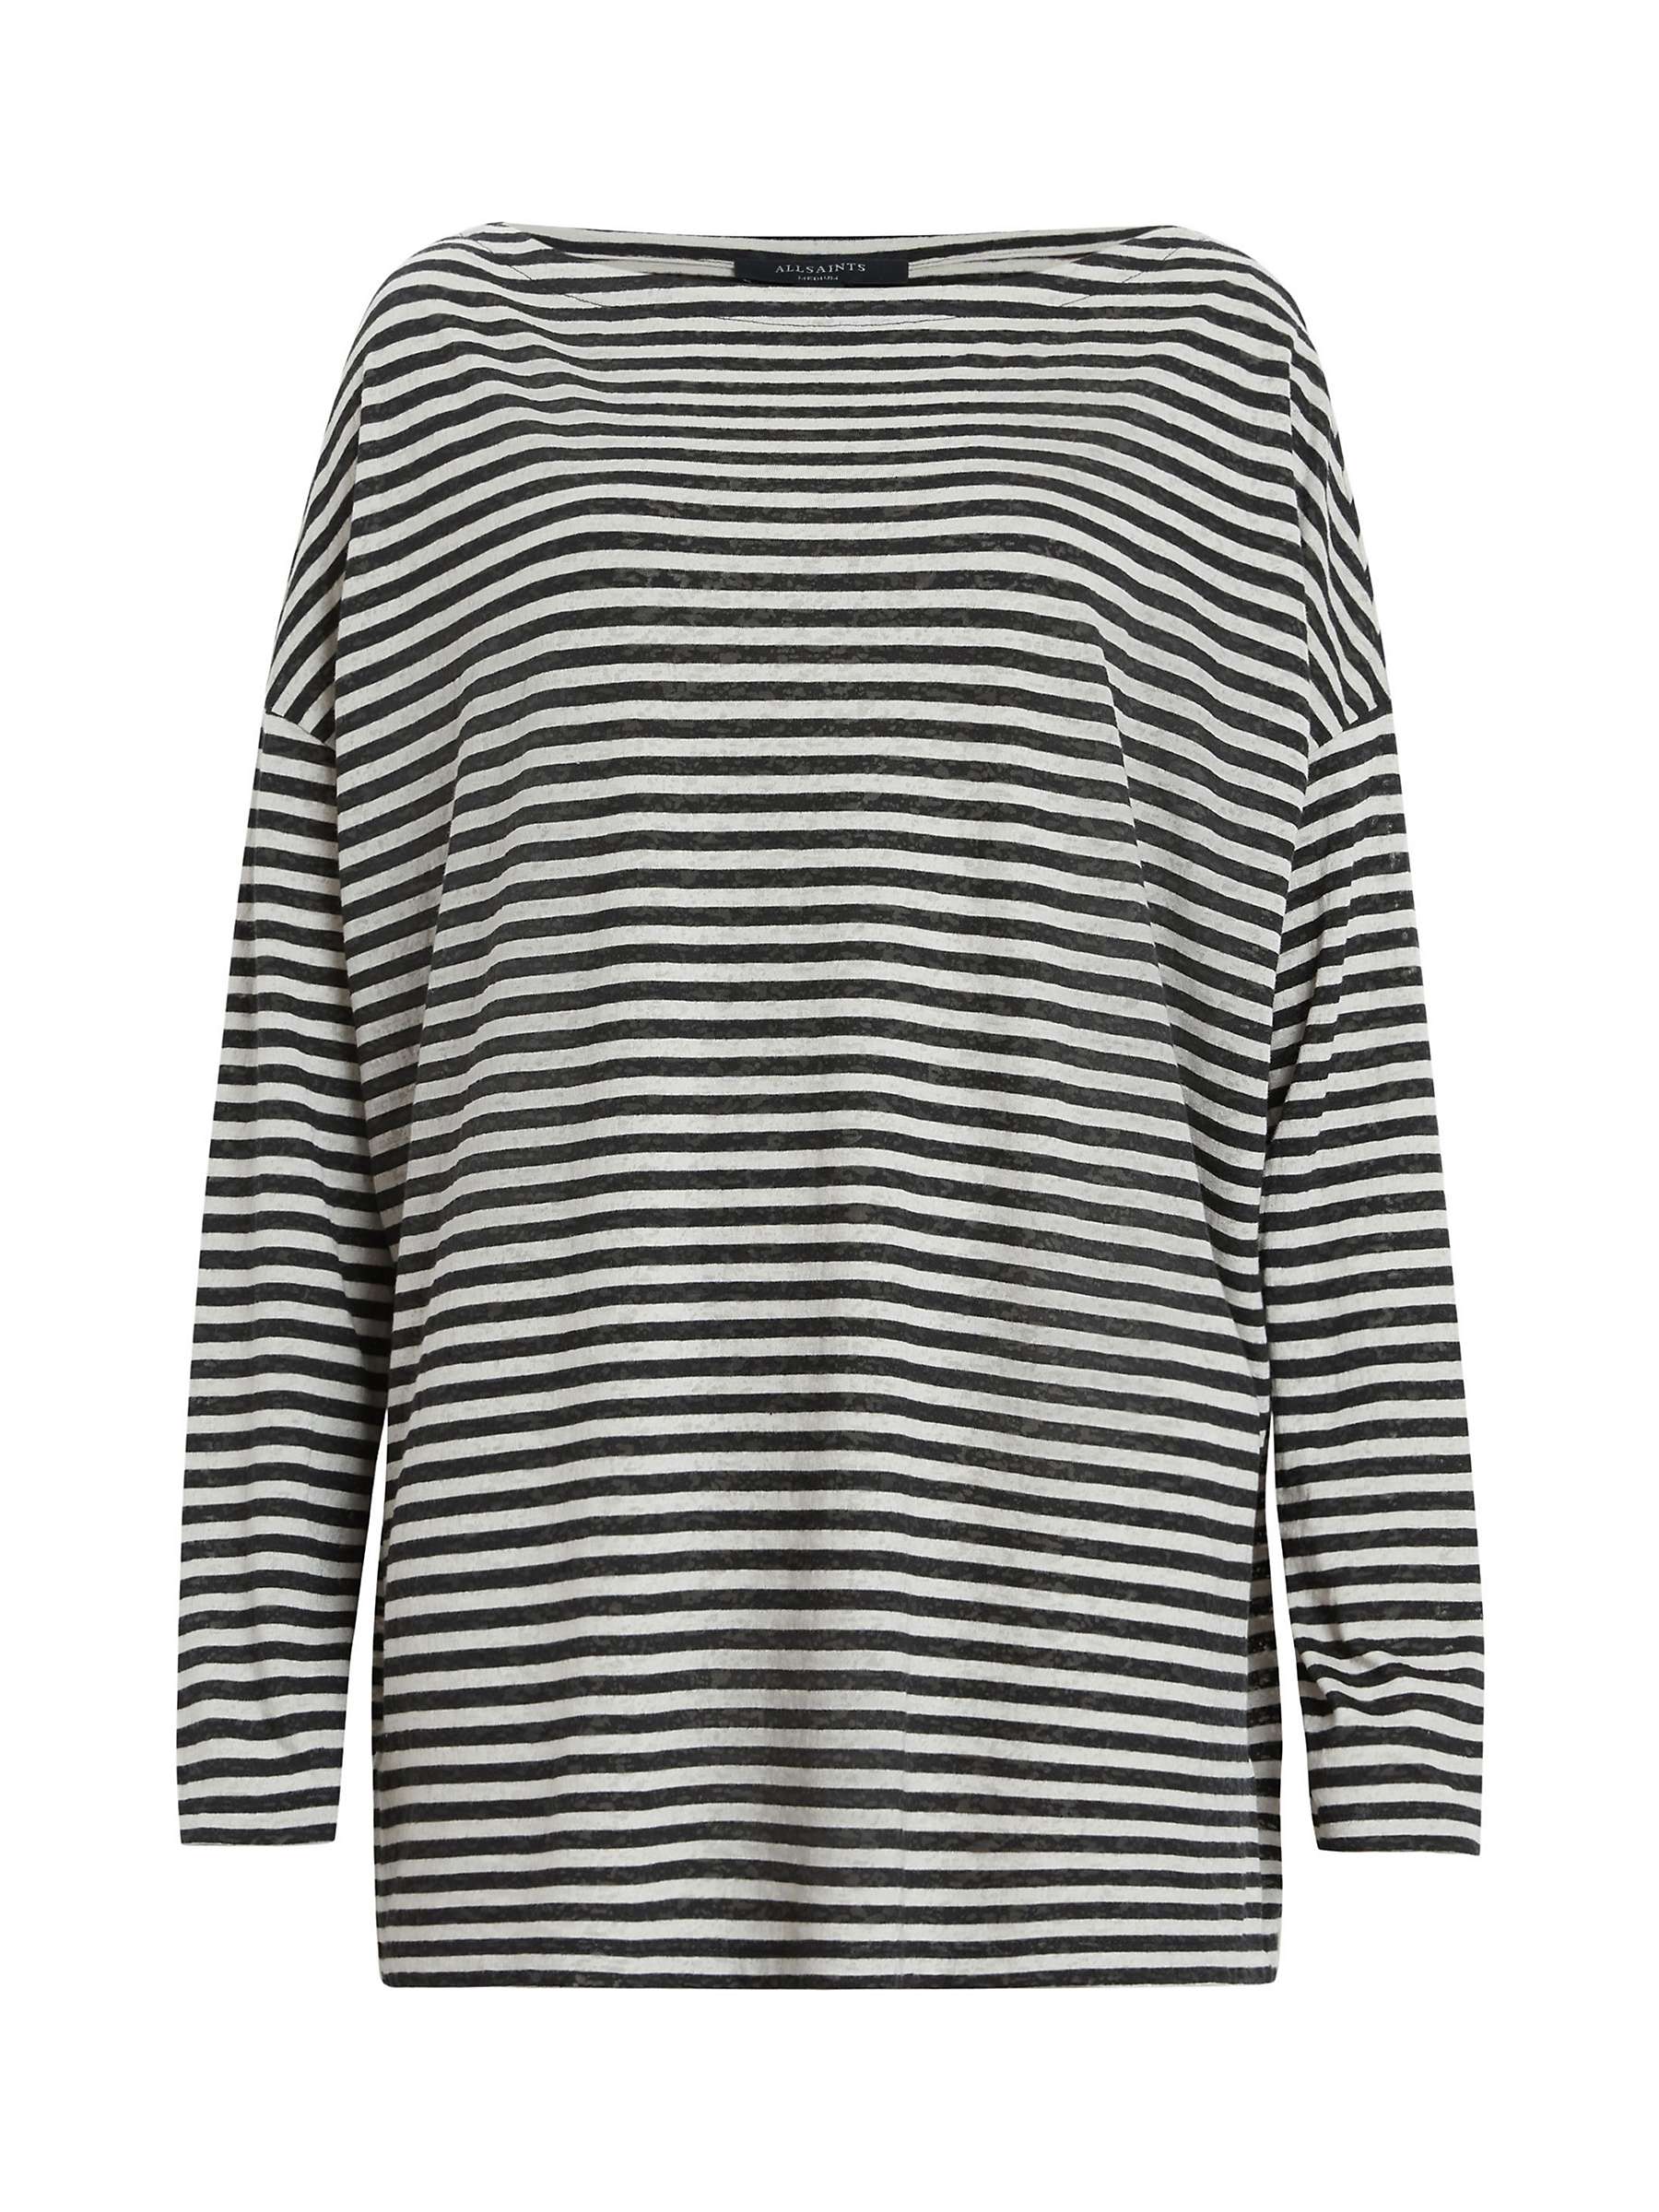 Buy AllSaints Rita Striped Jersey Top, Chalk/Ink Online at johnlewis.com